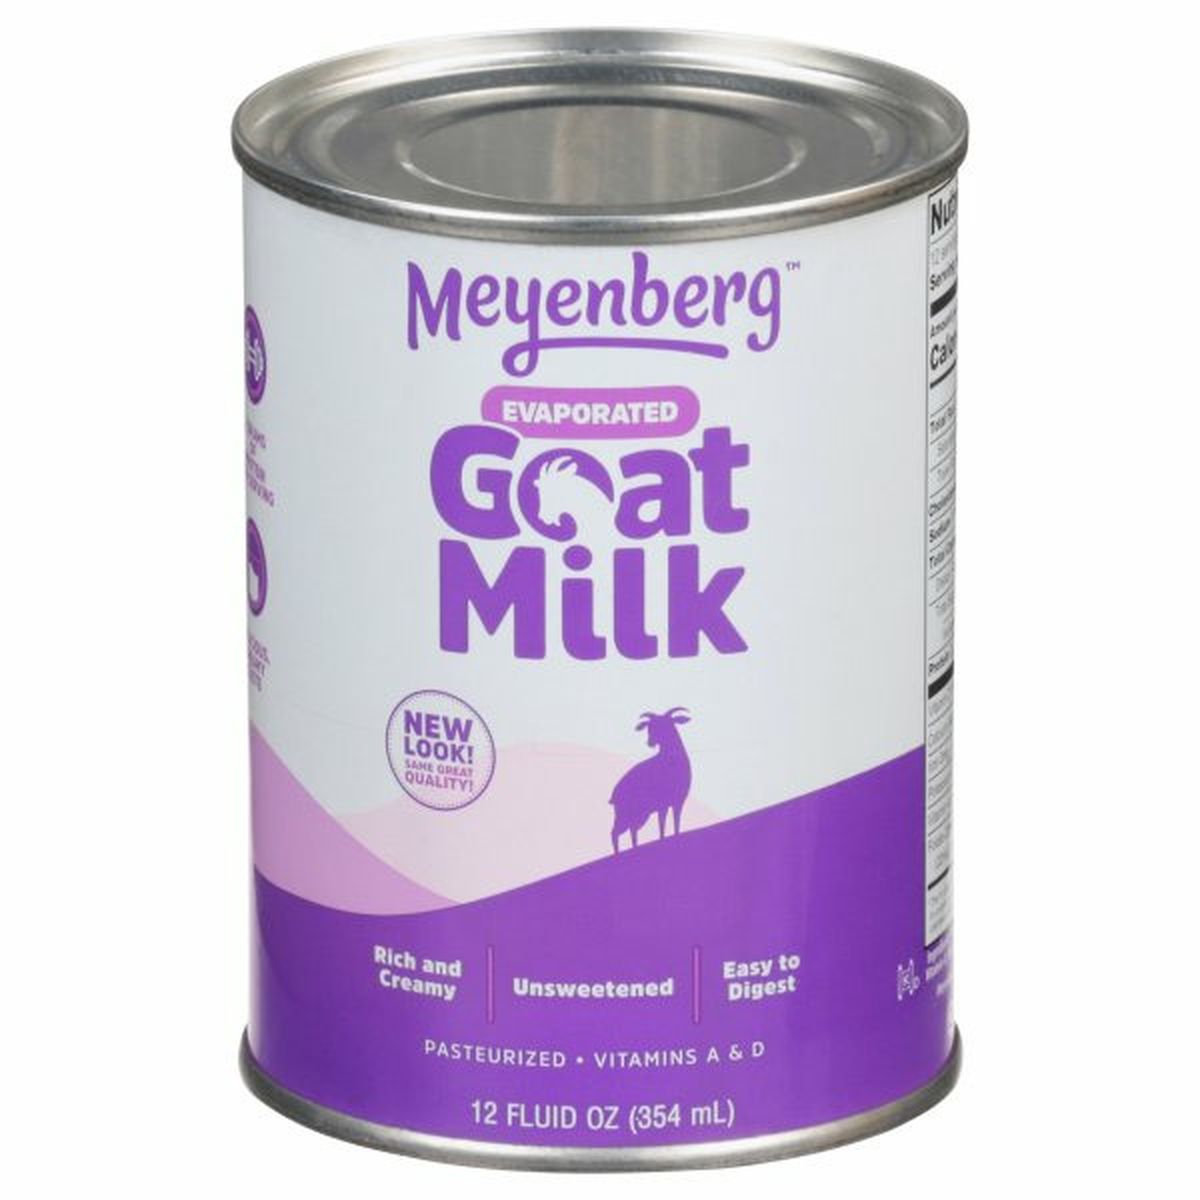 Calories in Meyenberg Goat Milk, Evaporated